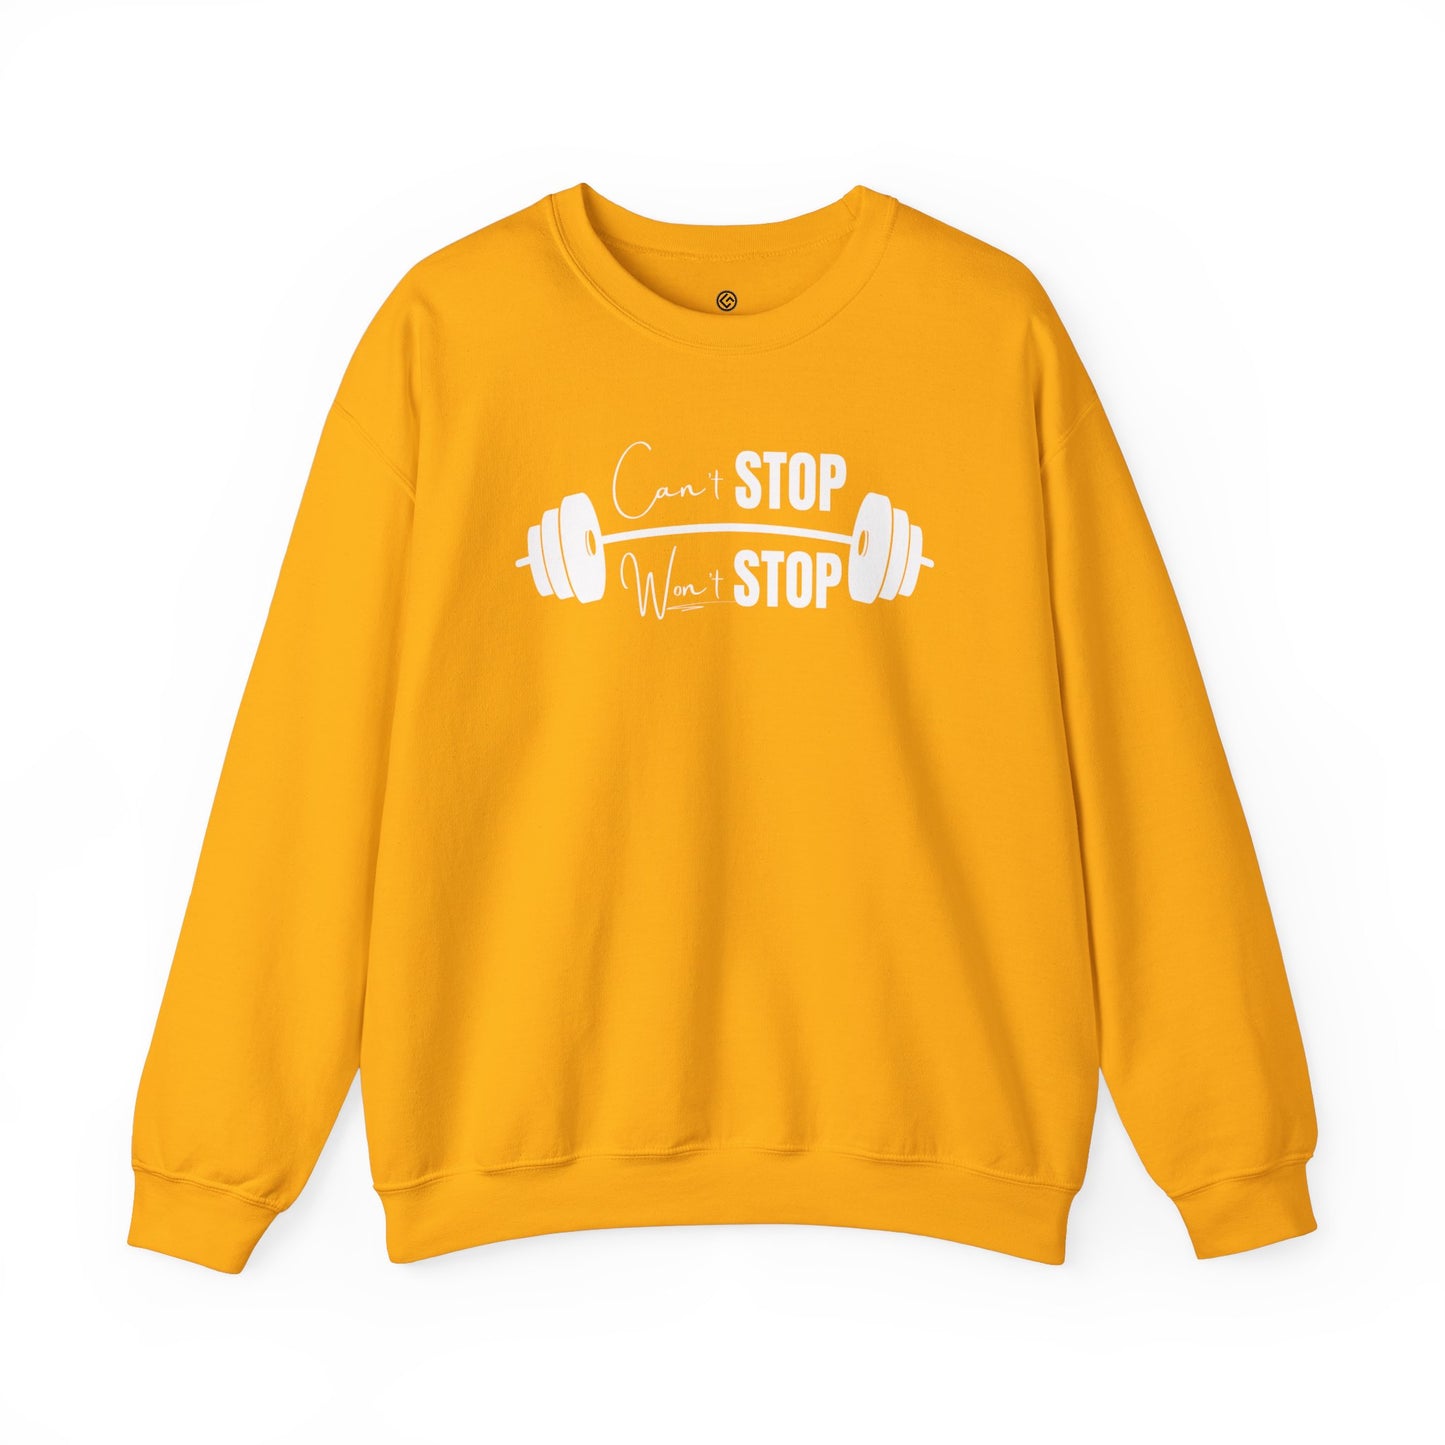 Can't Stop Won't Stop Crewneck Sweatshirt